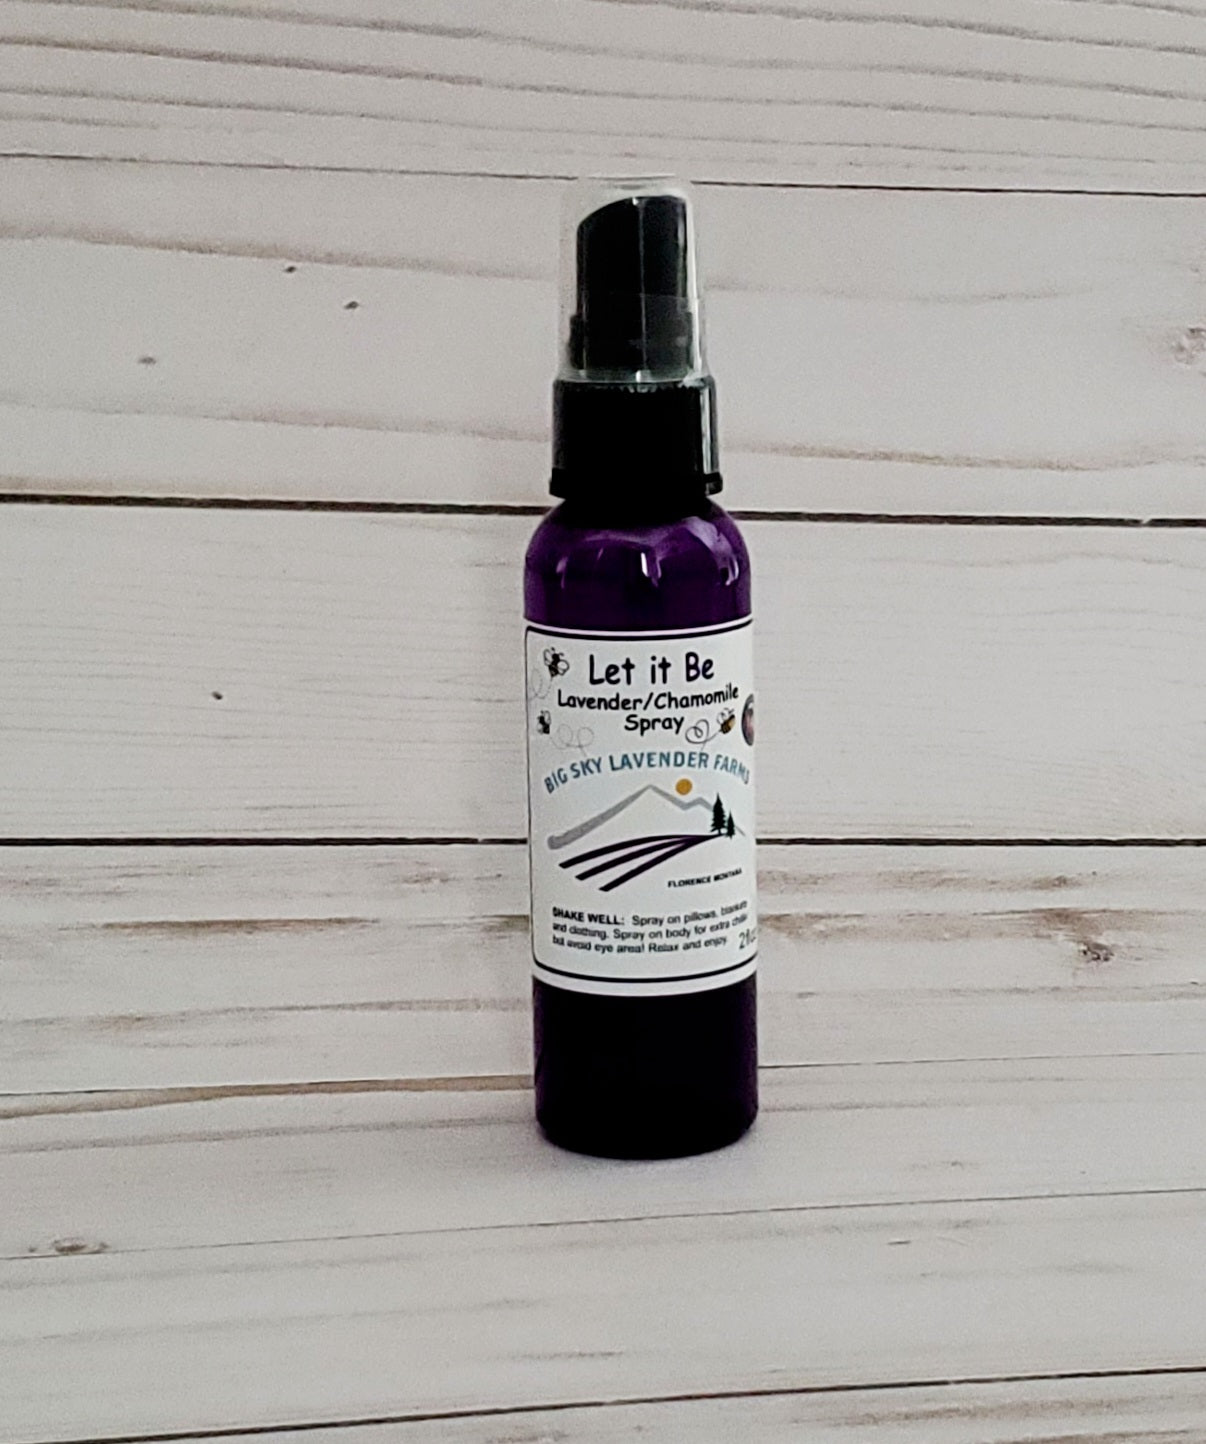 Lavender Oil - Organic - Diffuser - Calming - Sleep